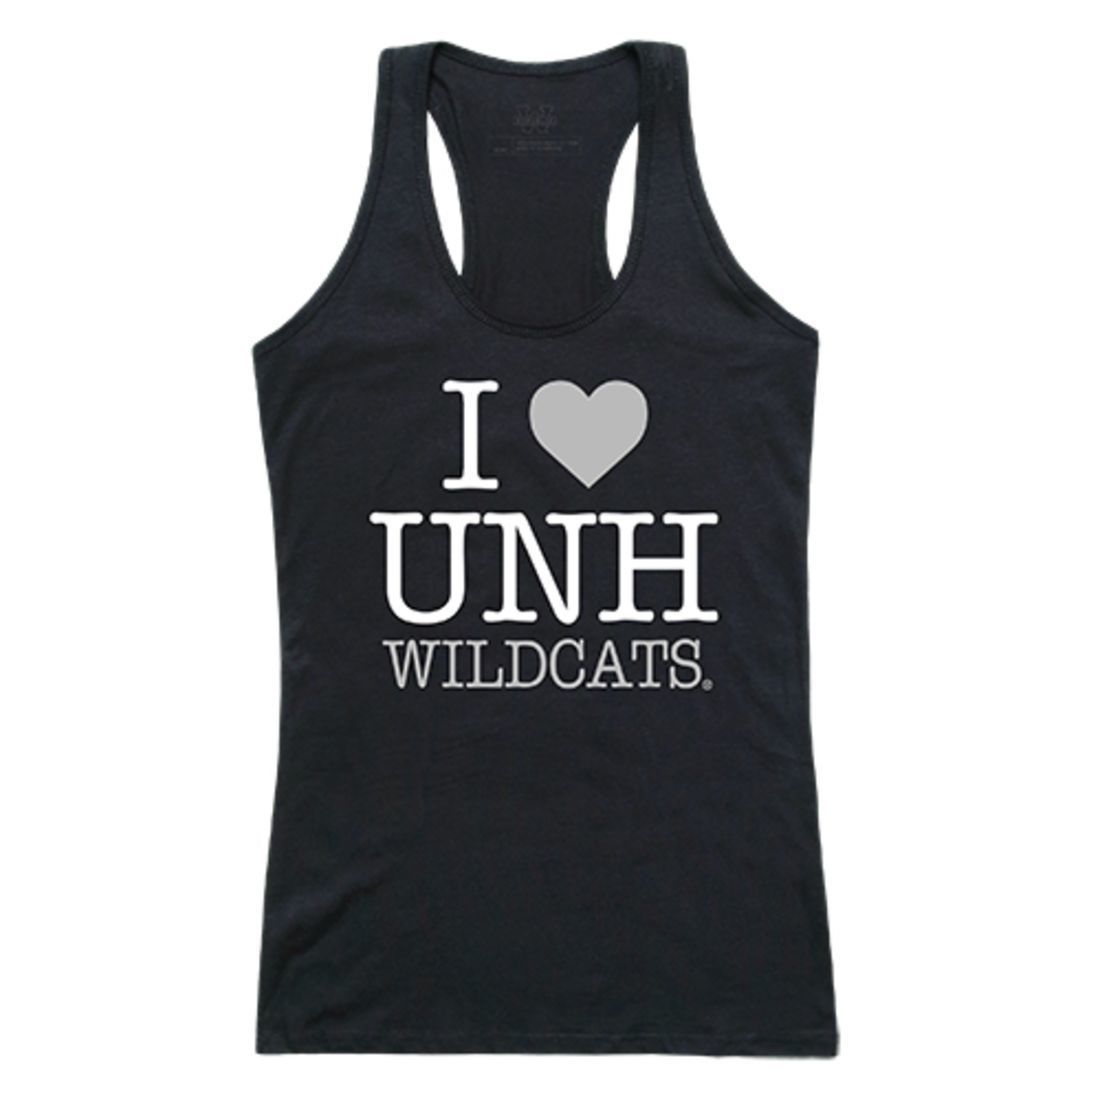 UNH University of New Hampshire Wildcats Womens Love Tank Top Tee T-Shirt Black-Campus-Wardrobe